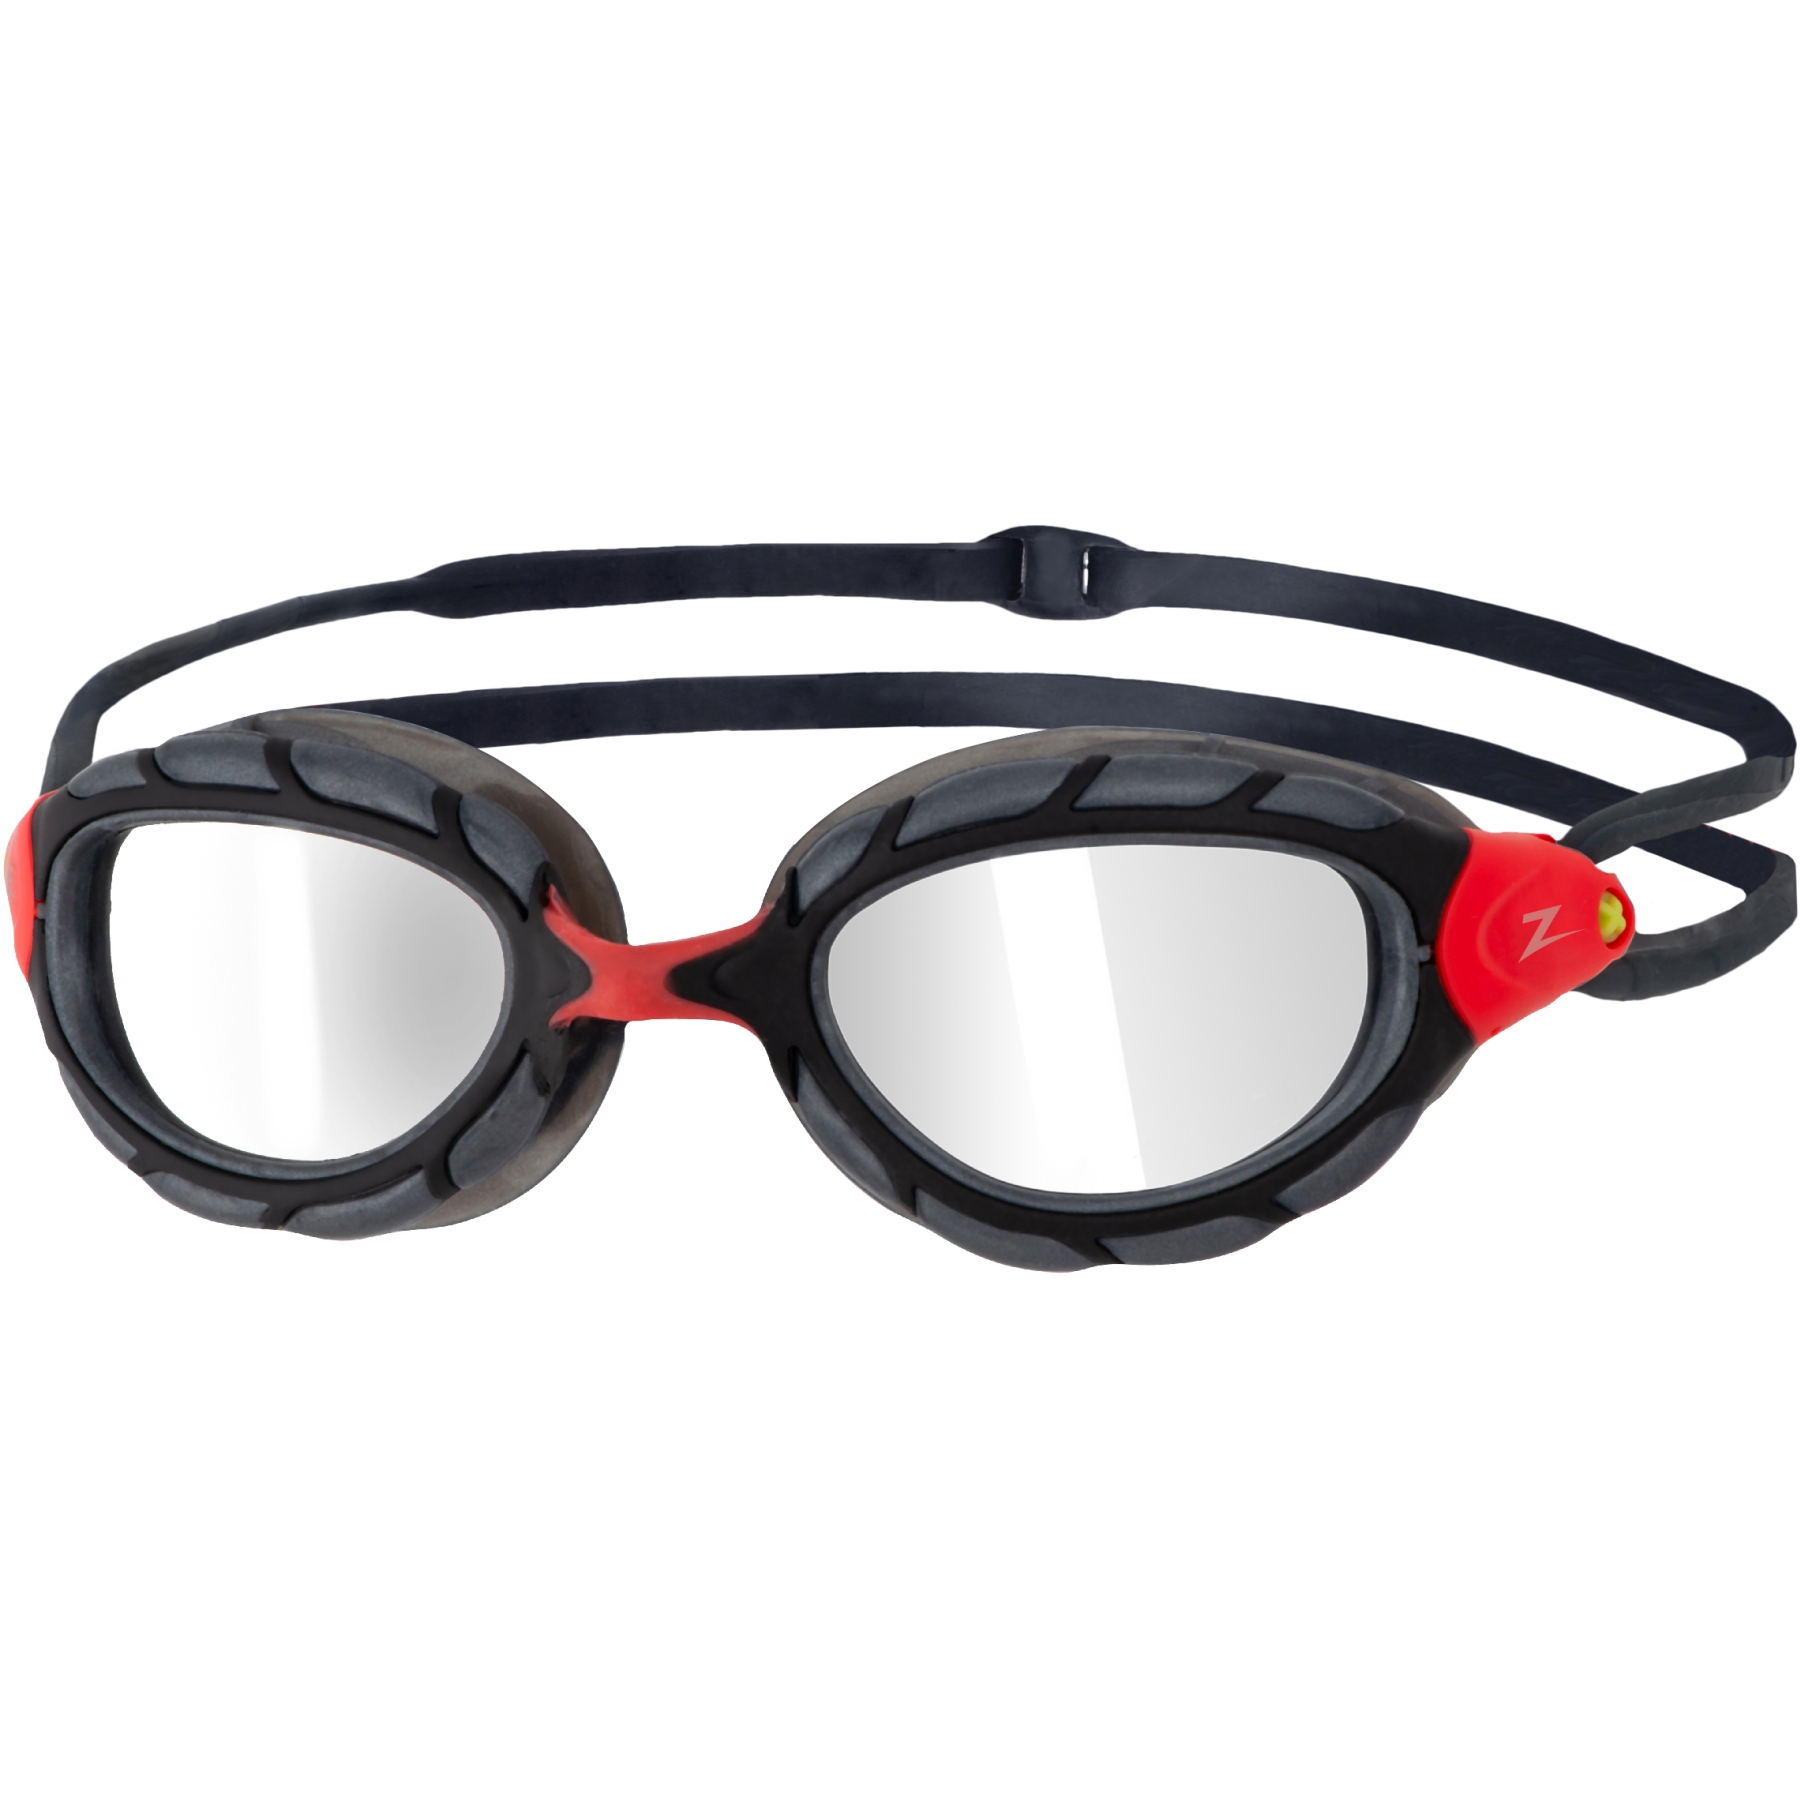 Productfoto van Zoggs Predator Titanium Zwembril - Mirror Lenses - Small Fit - Red/Grey